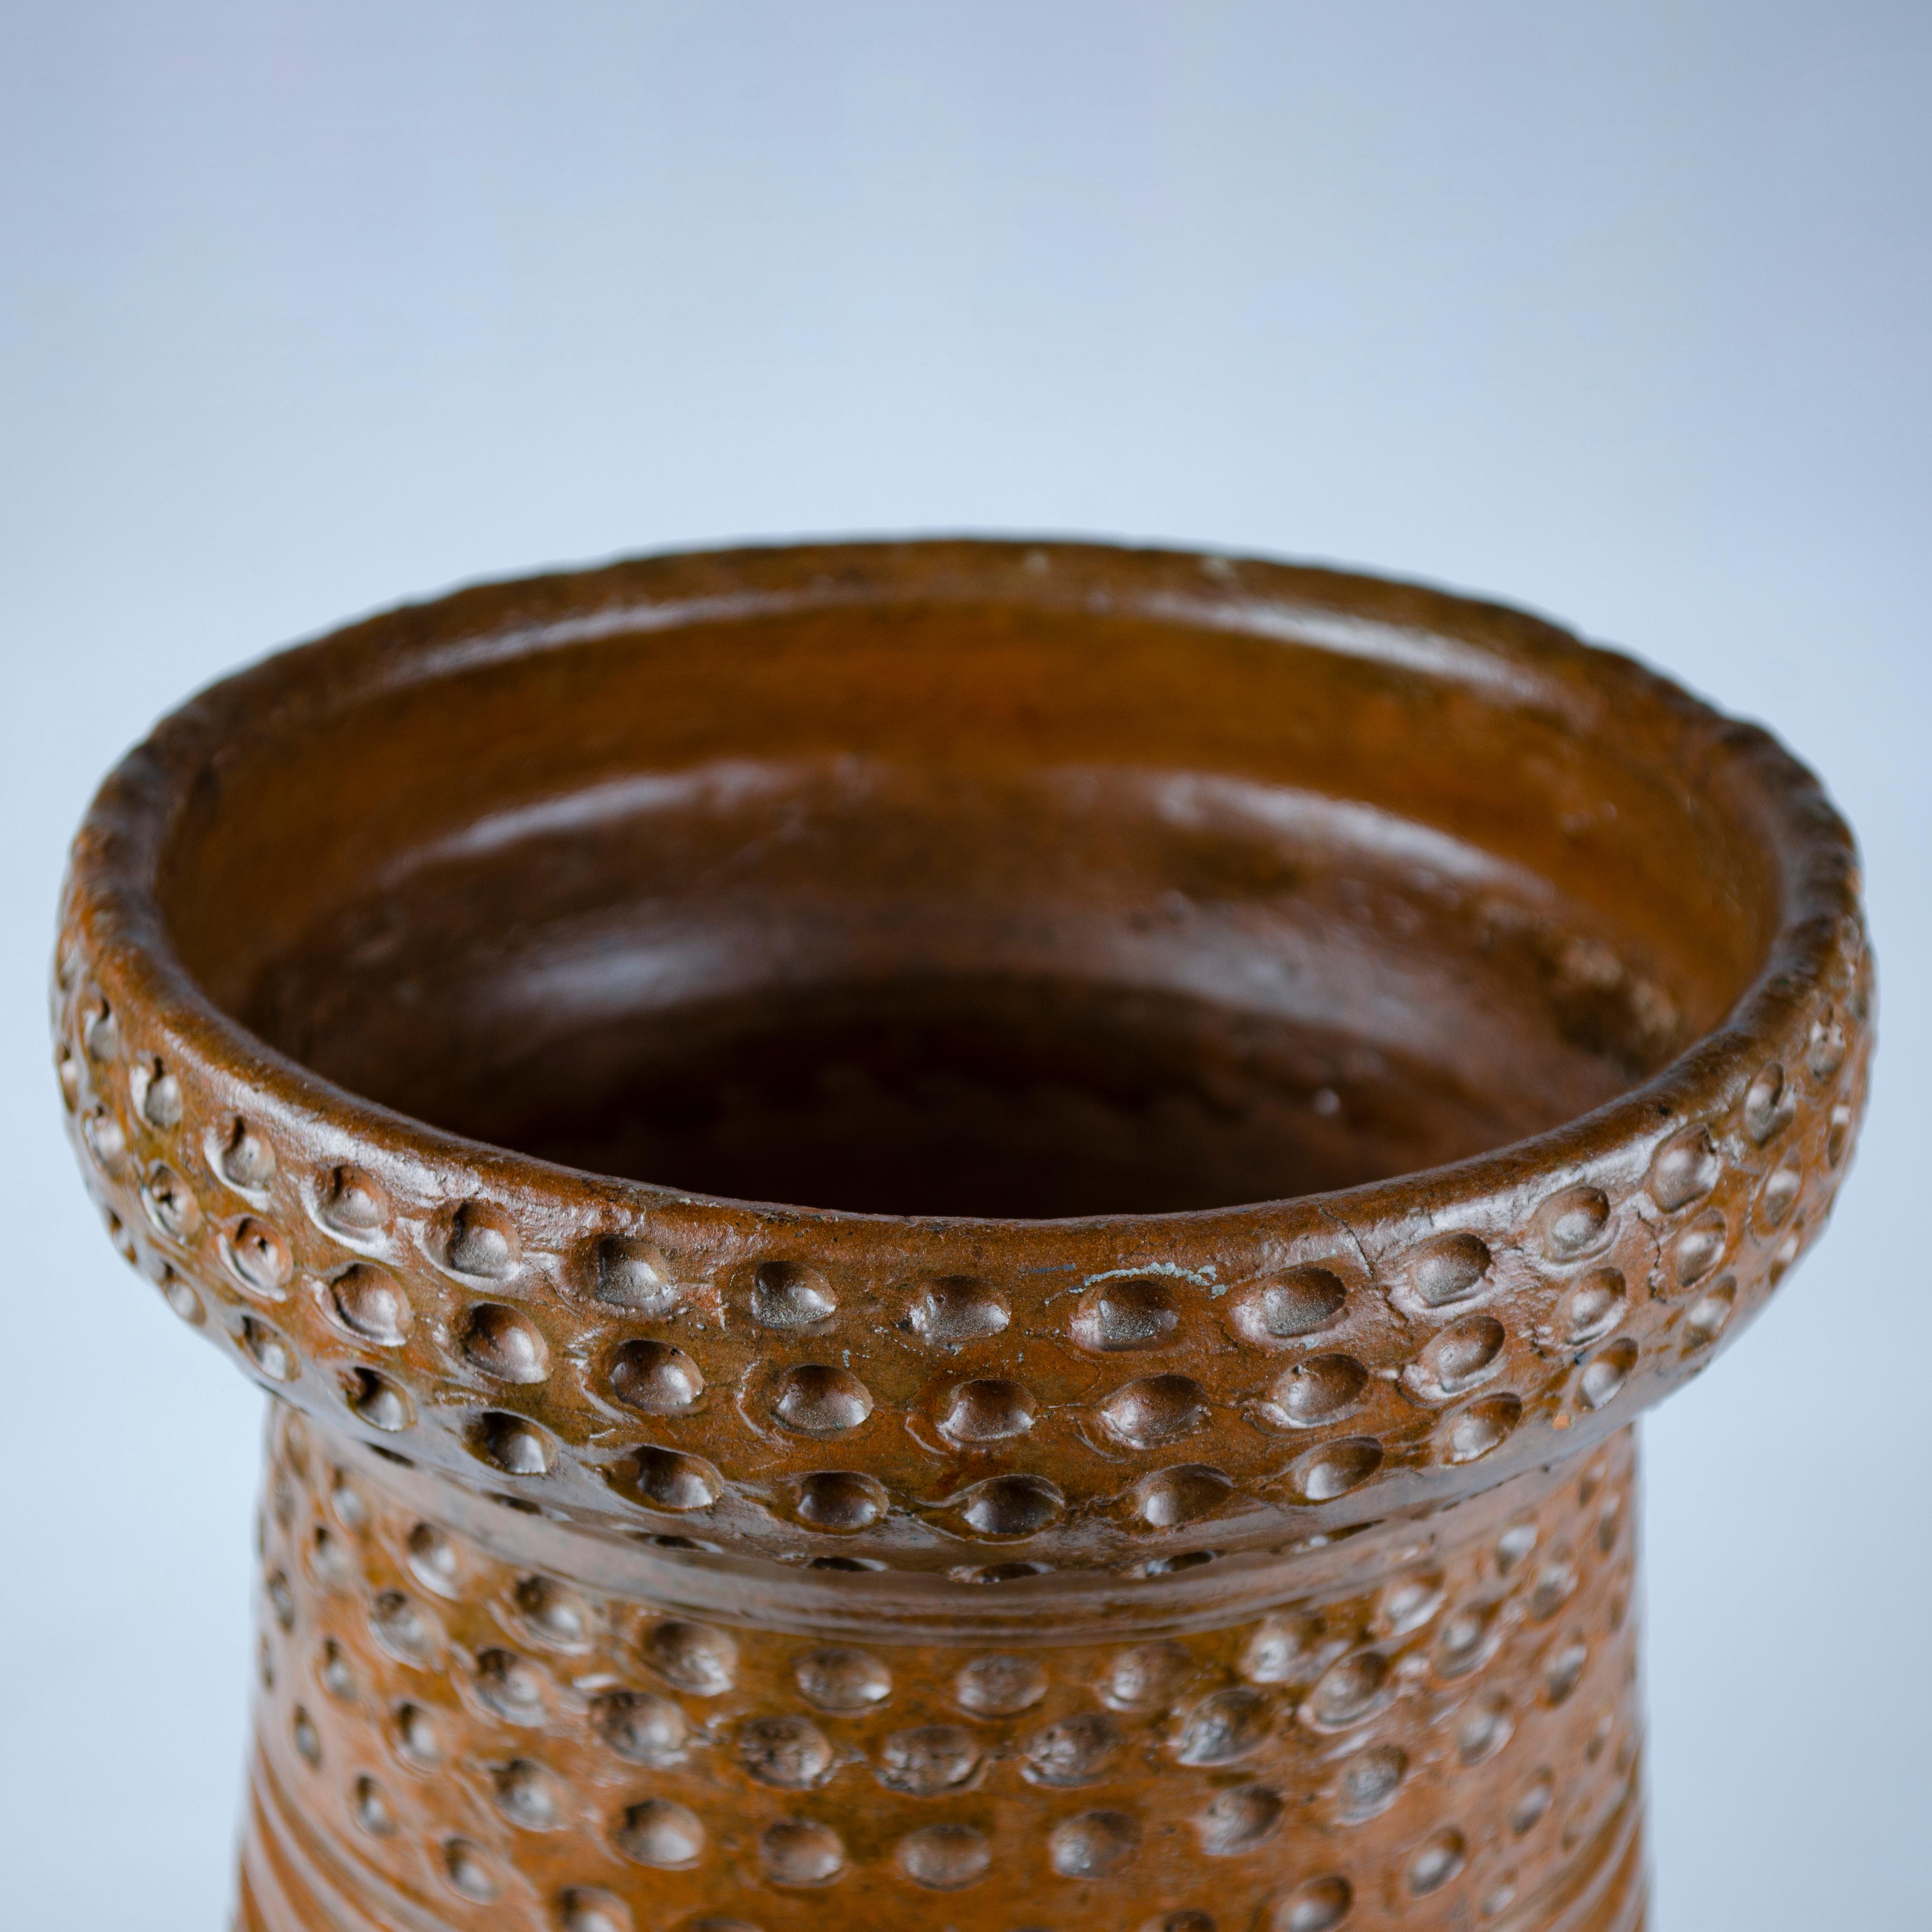 Brown ceramic vase made by Jean Besnard (1889-1958). Signed Jean Besnard.

France, CIRCA 1930.